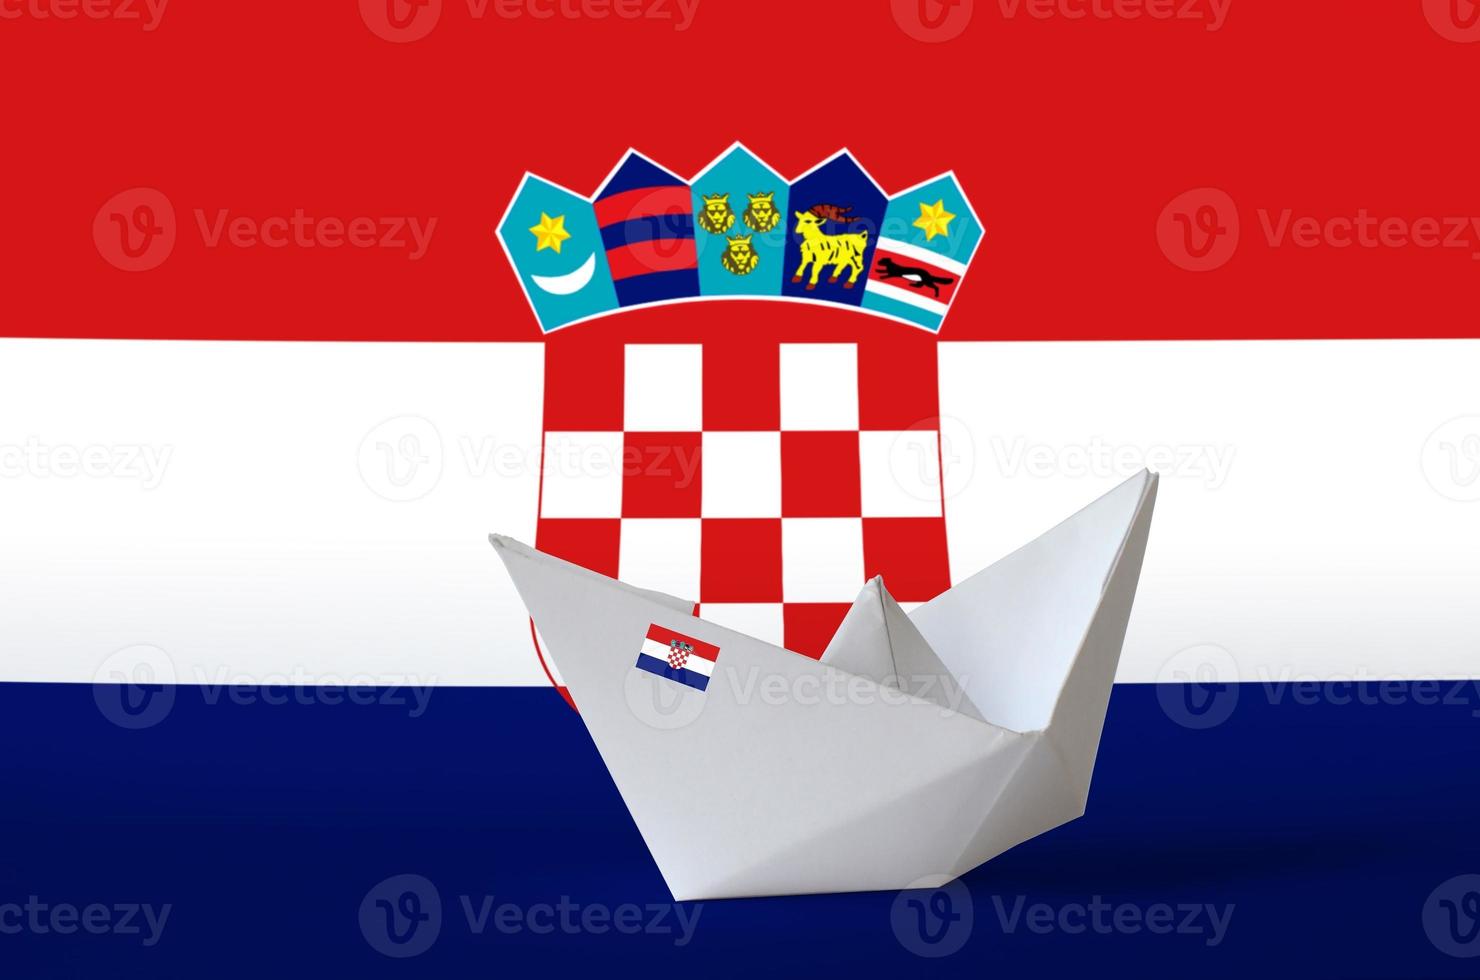 Croatia flag depicted on paper origami ship closeup. Handmade arts concept photo